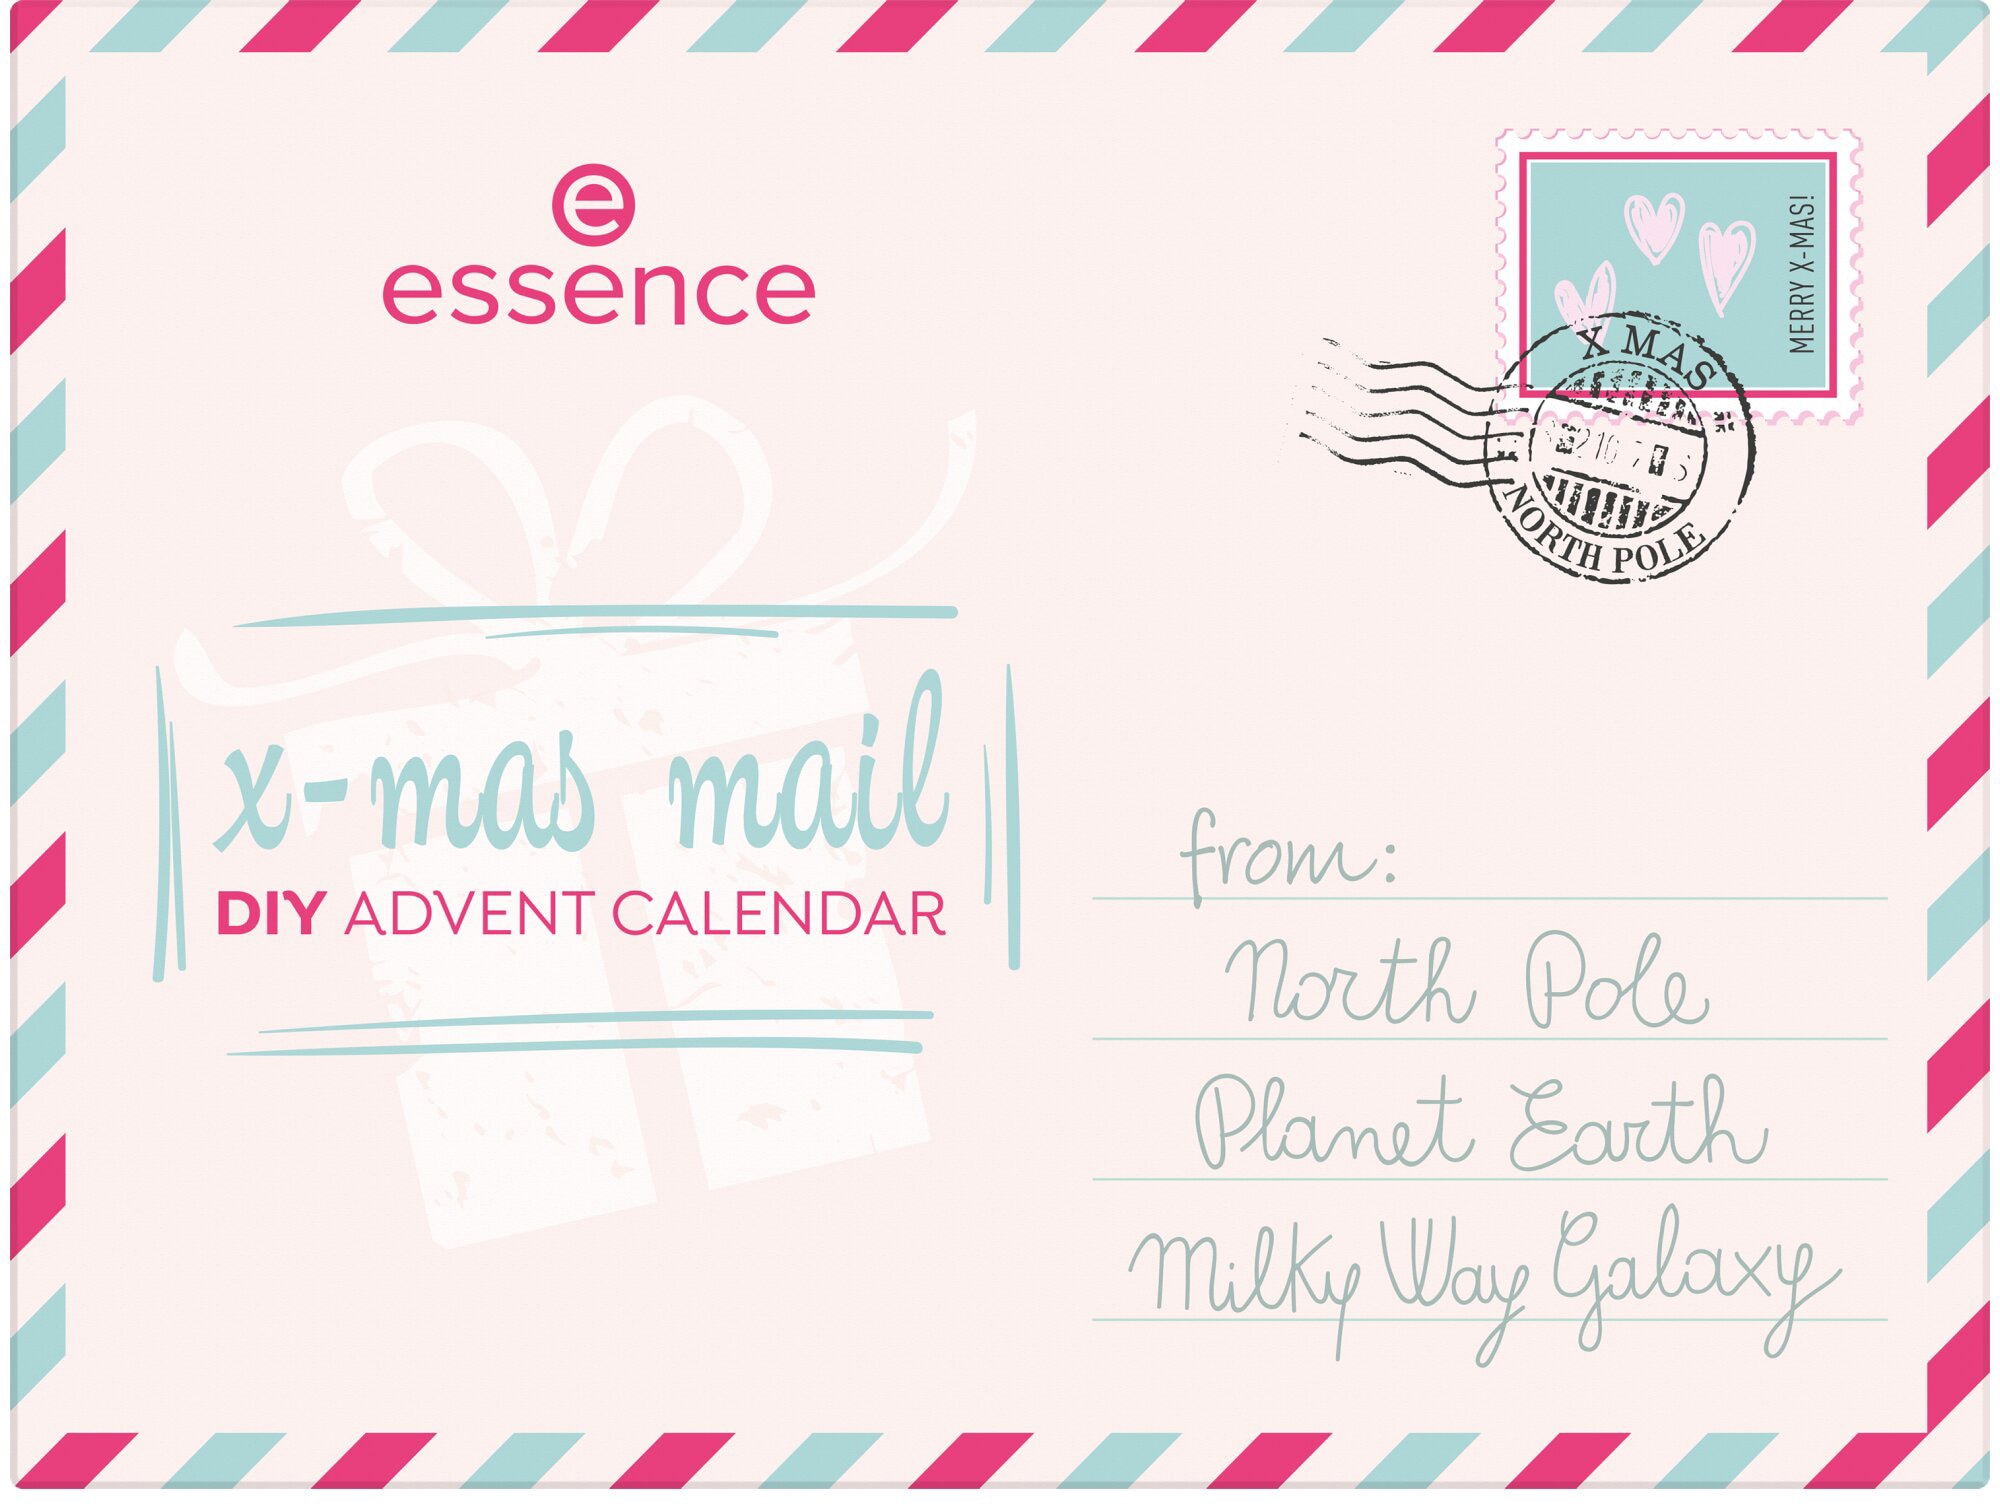 Essence Adventskalender »x-mas mail DIY ADVENT CALENDAR«, ab 14 Jahren